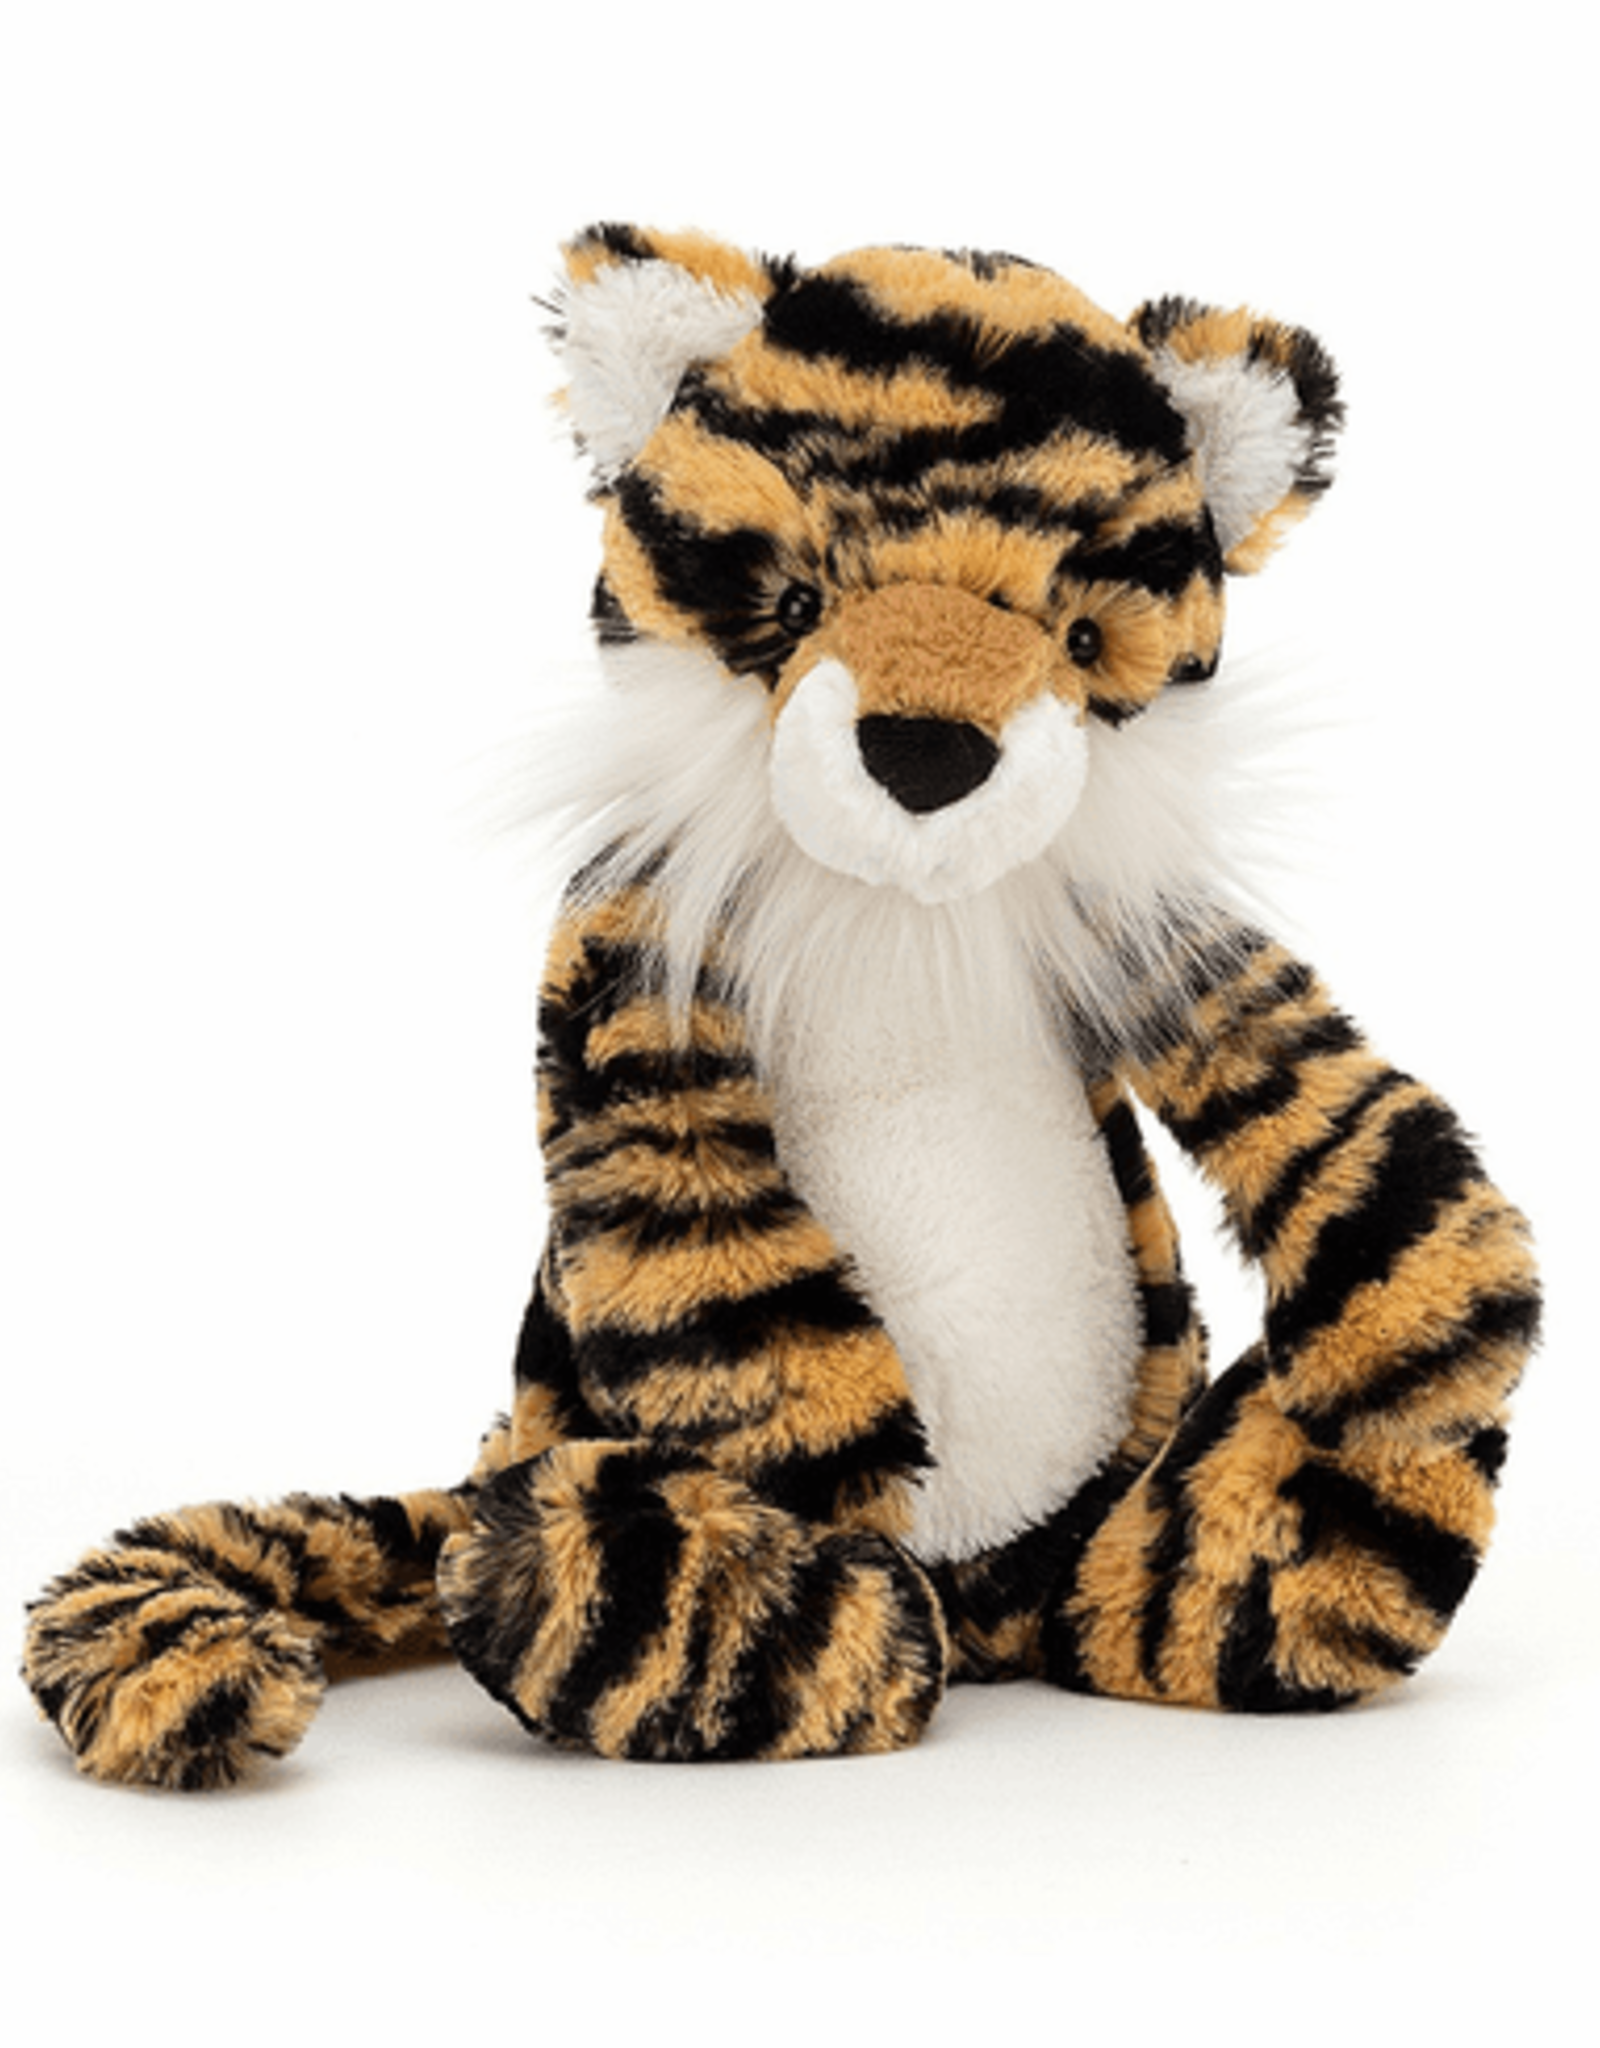 Jellycat bashful tiger- medium